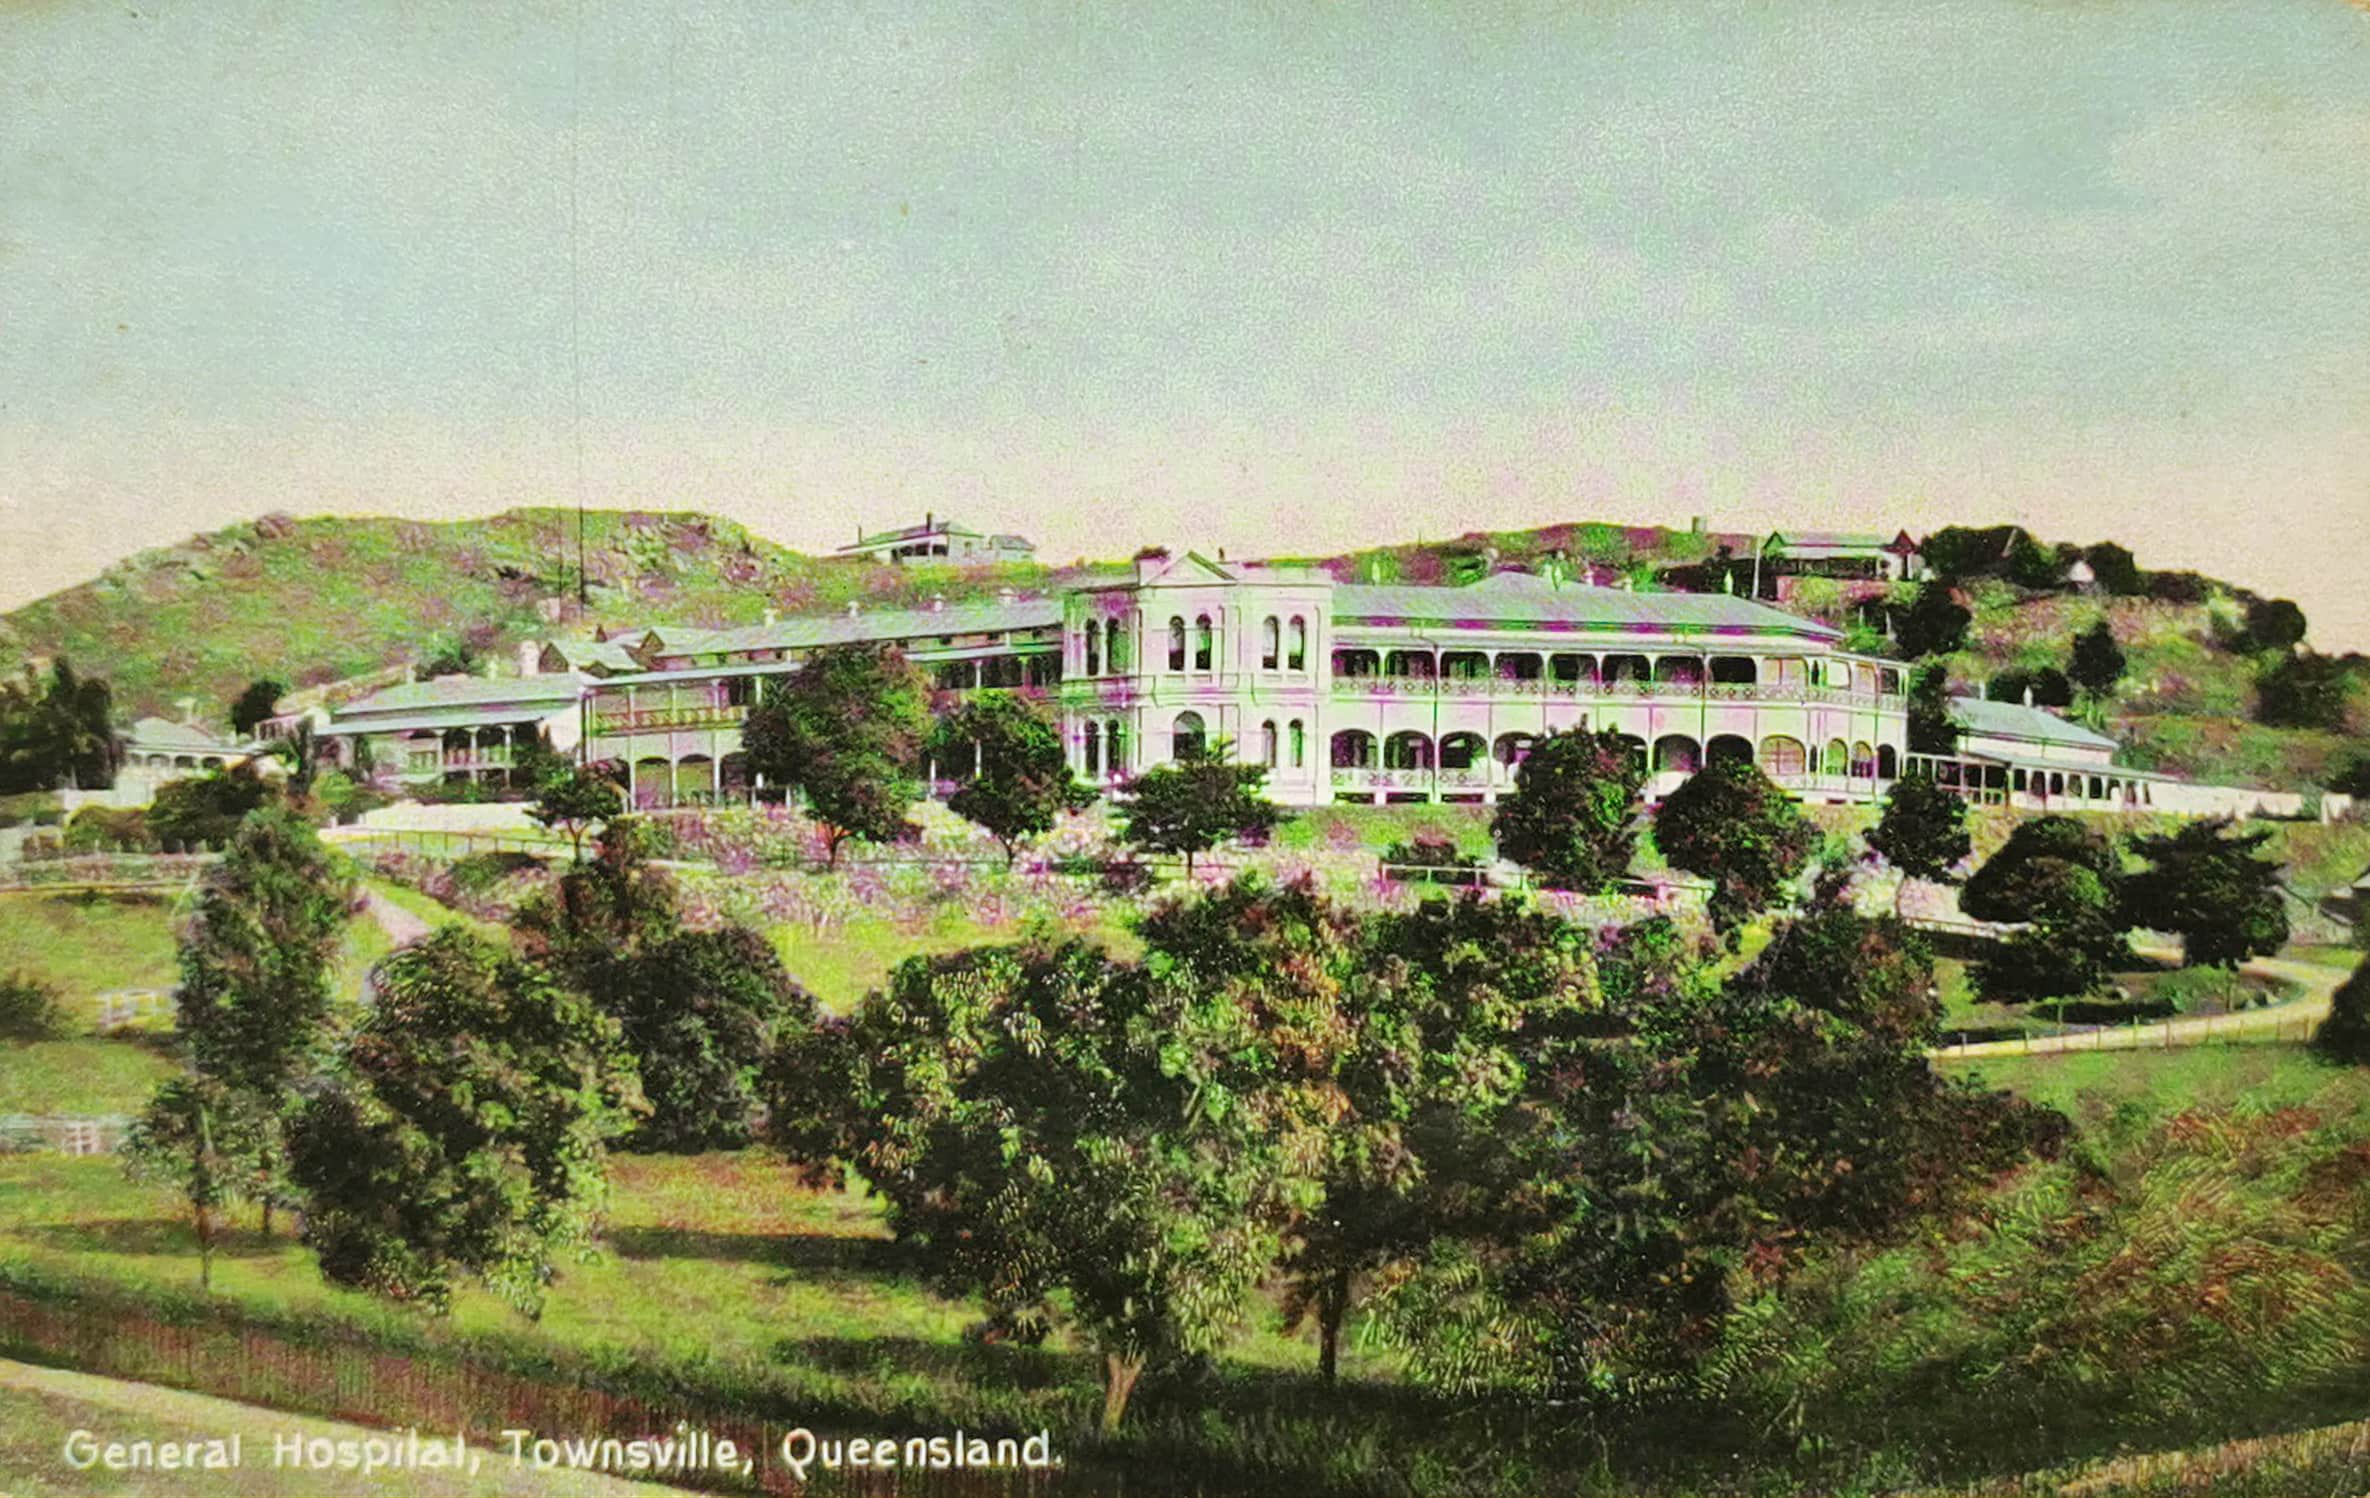 General Hospital, Townsville, Queensland - Antique Ephemera from 1905